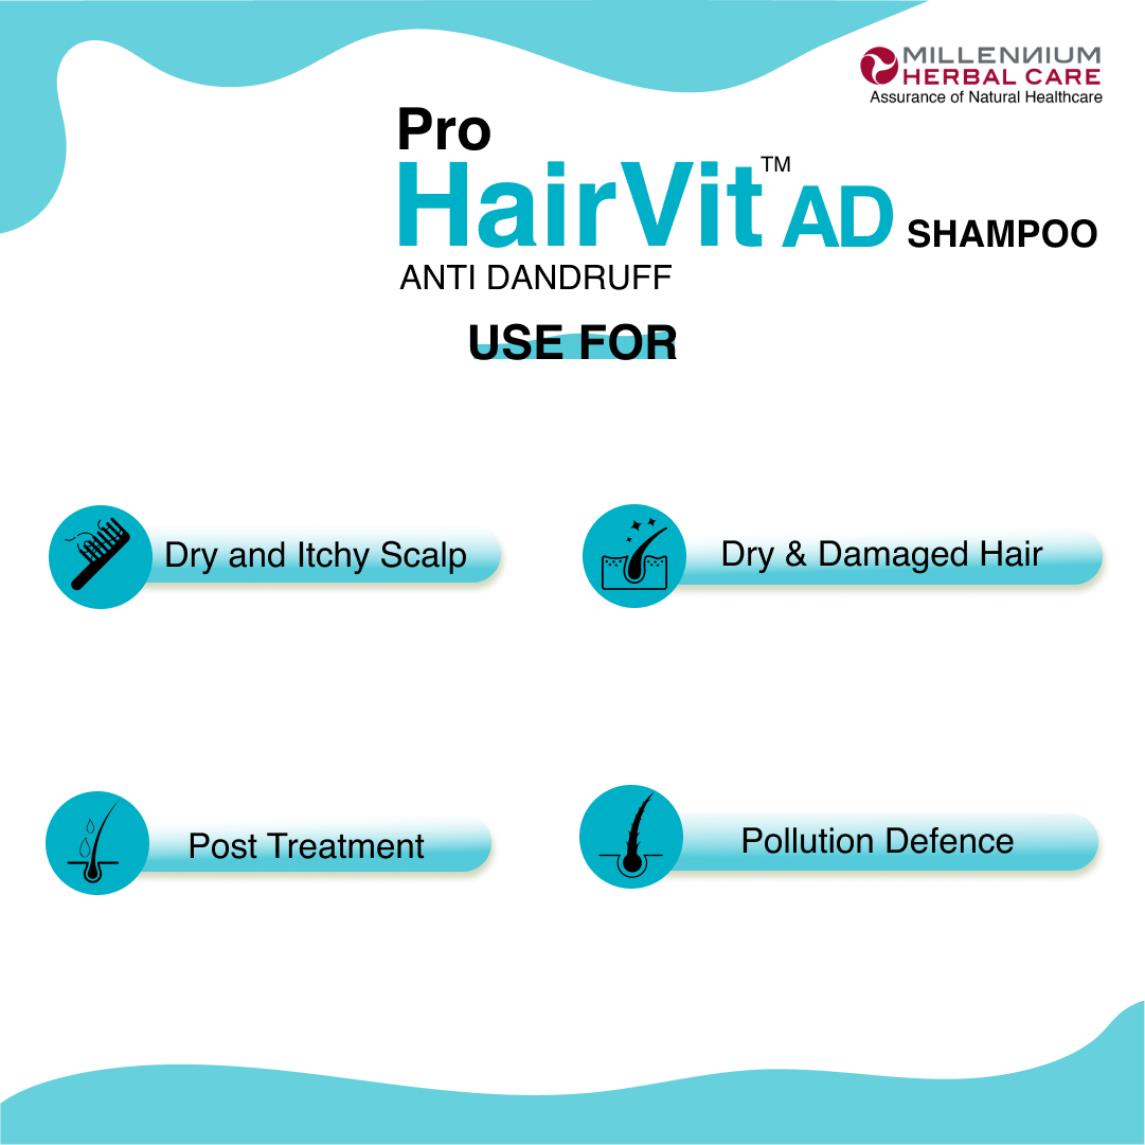 Uses of Pro Hairvit AD Shampoo